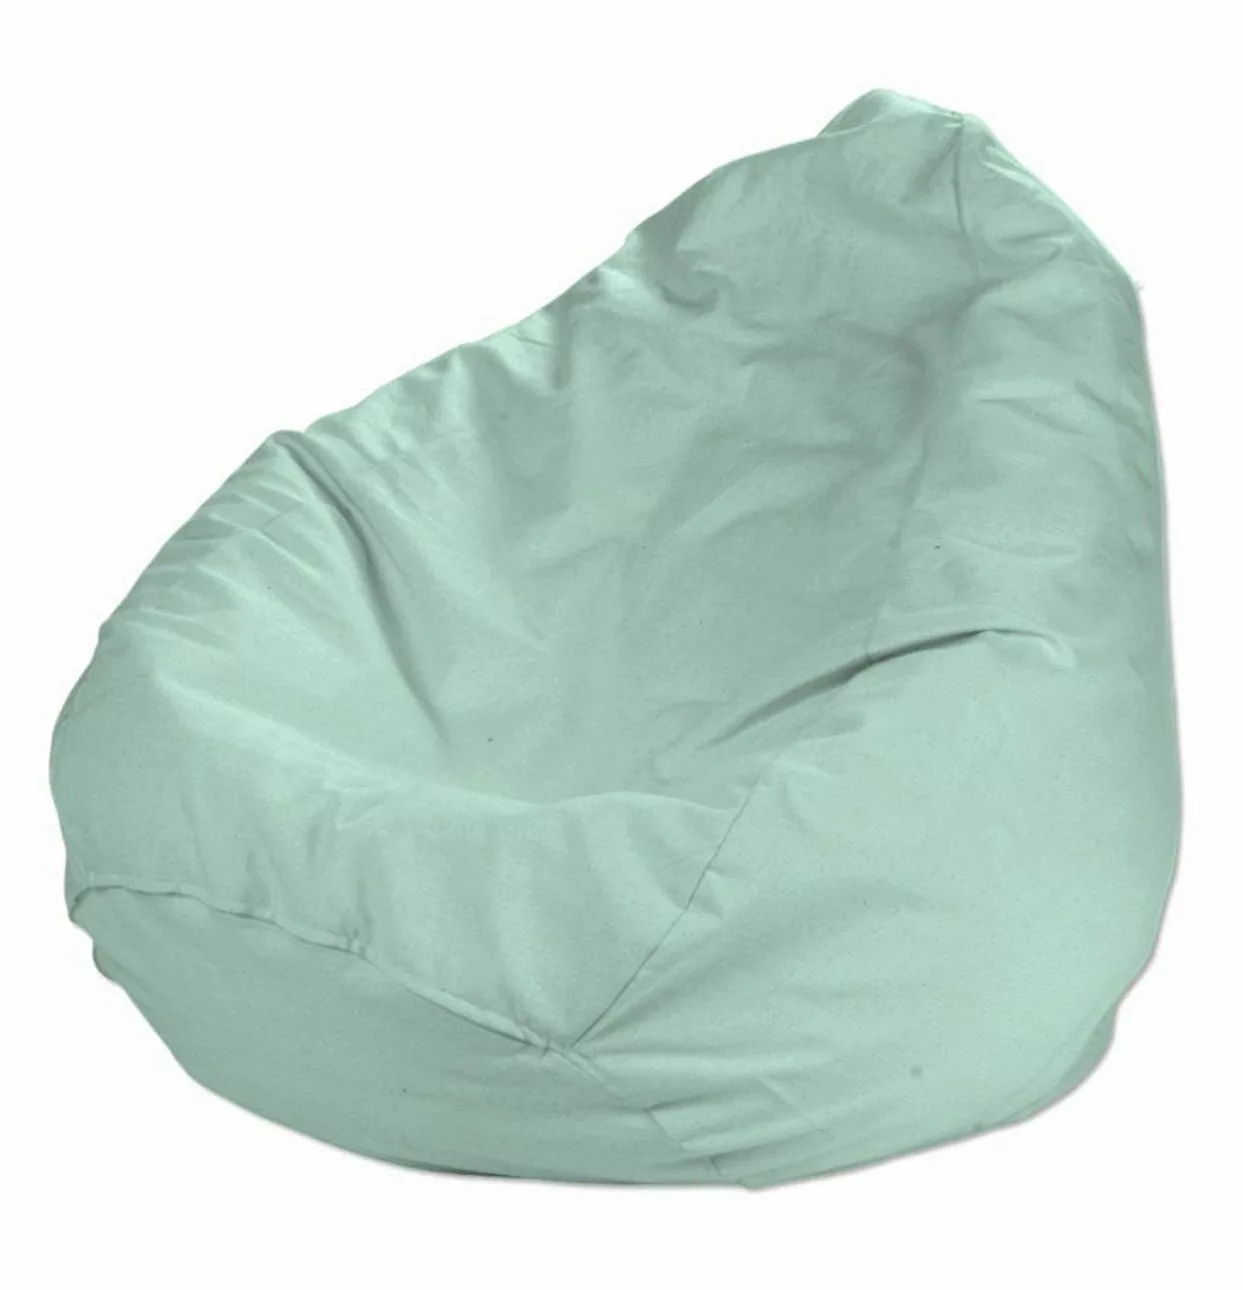 Bezug für Sitzsack, mintgrün, Bezug für Sitzsack Ø60 x 105 cm, Loneta (133- günstig online kaufen